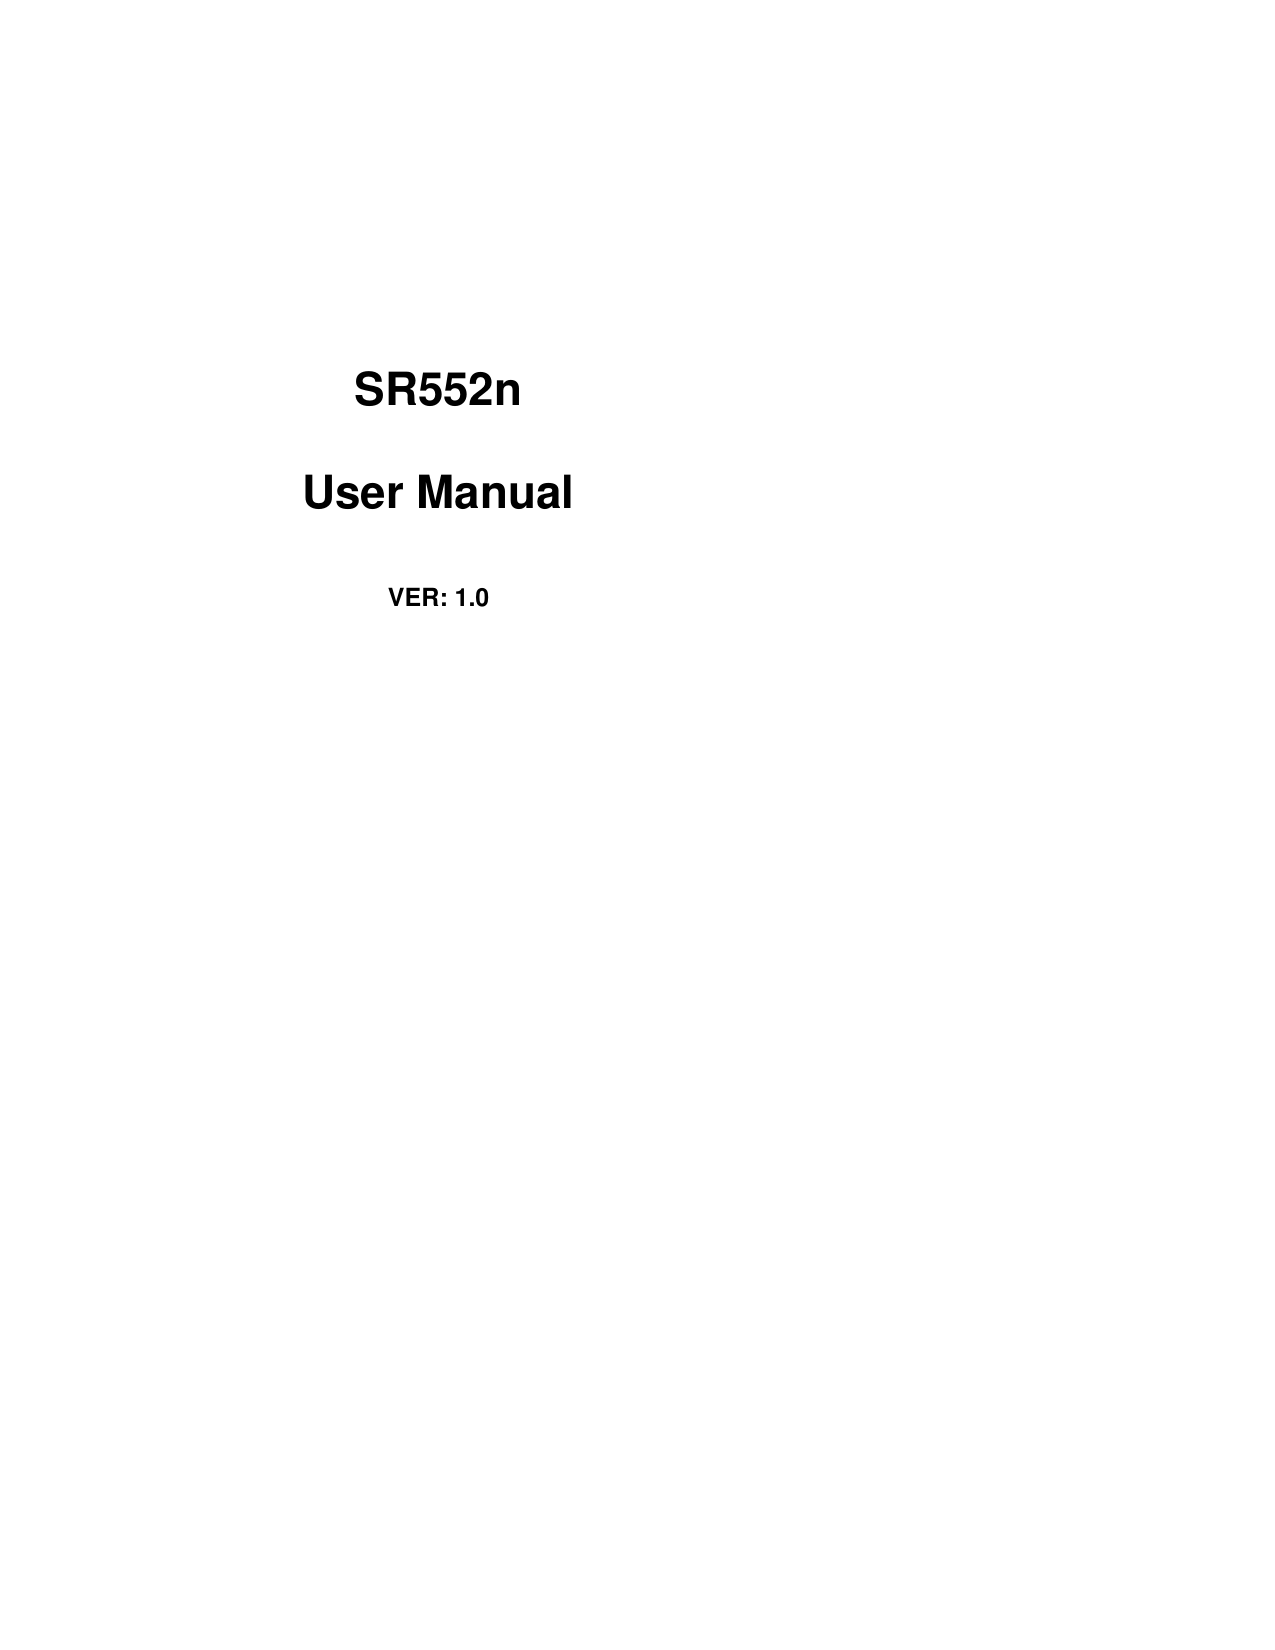 SR552nUser ManualVER: 1.0